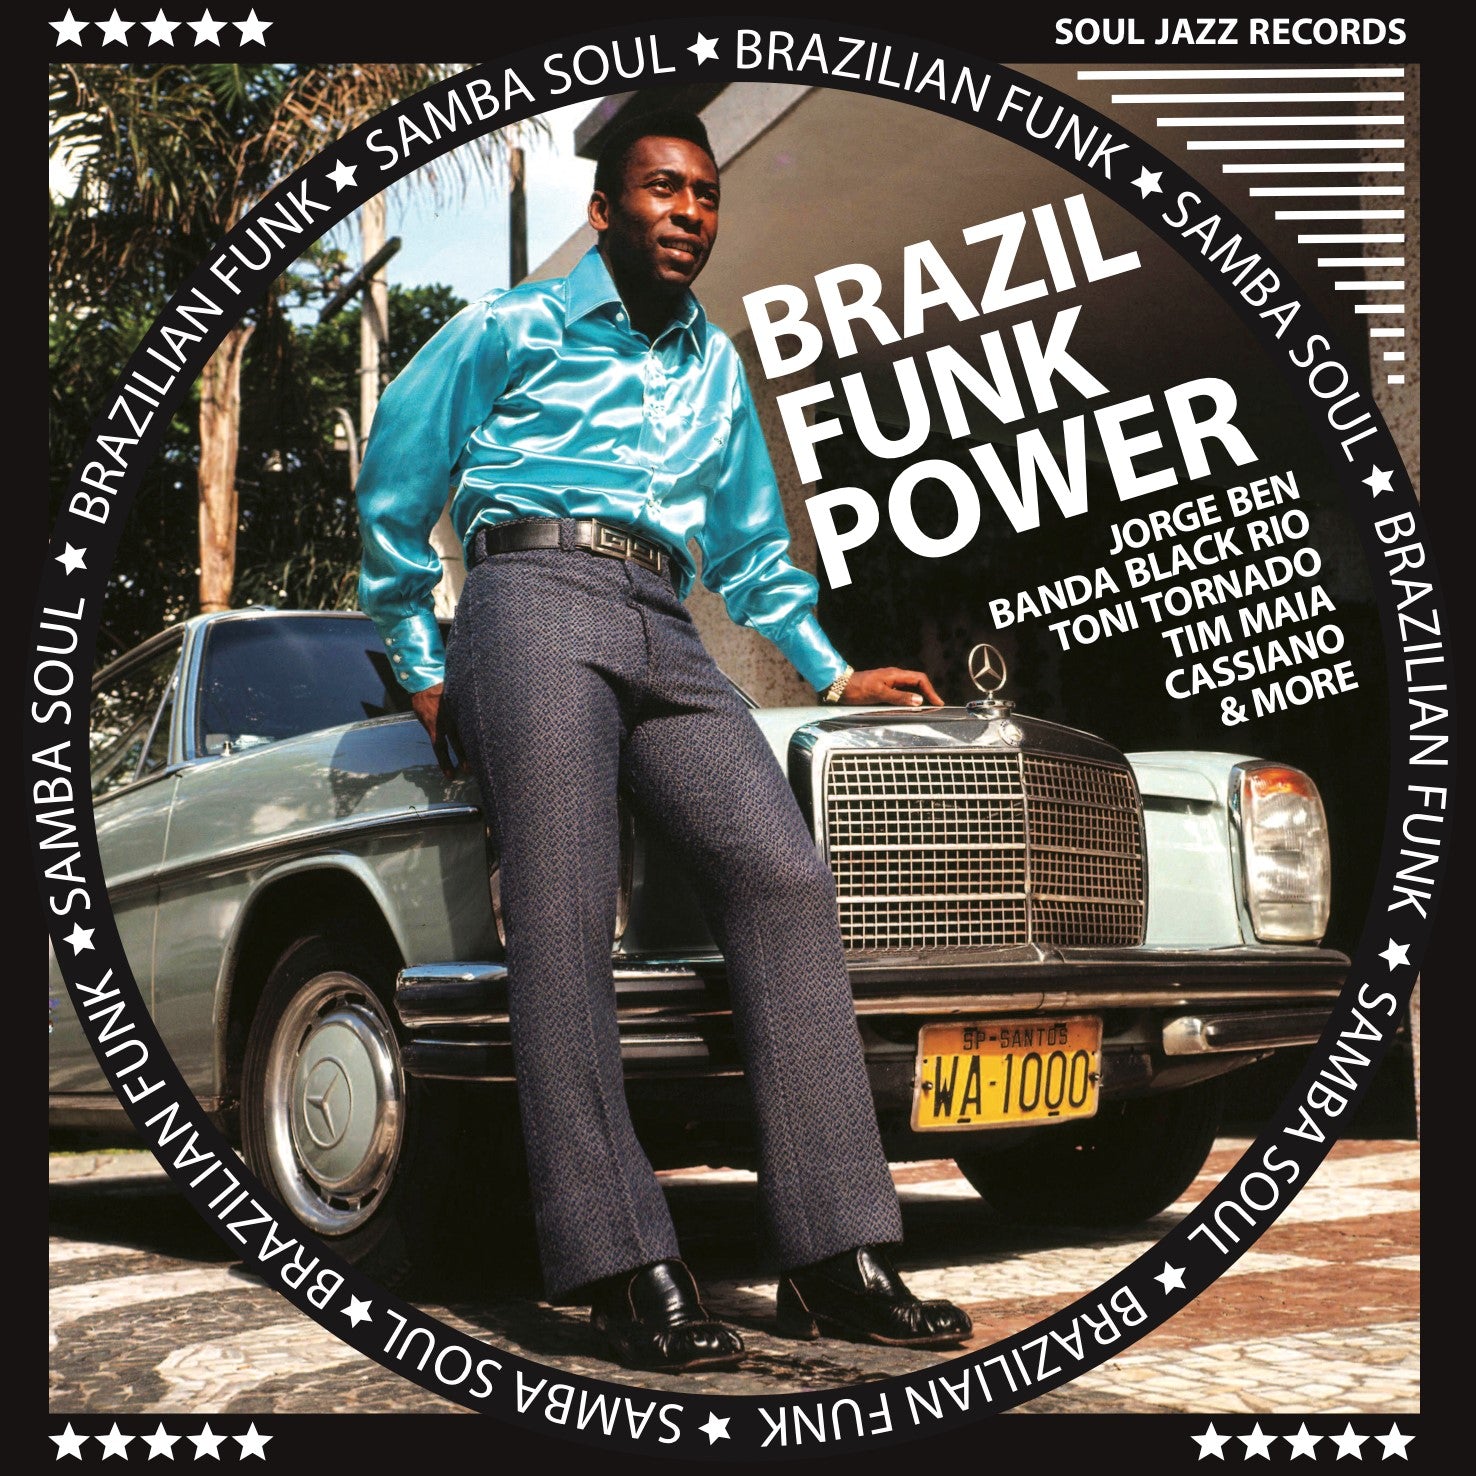 VARIOUS - Soul Jazz Records Presents...Brazilian Funk Power (Brazilian Funk & Samba Soul) - 7"x5 Limited Edition Boxset [RSD2020-AUG29]